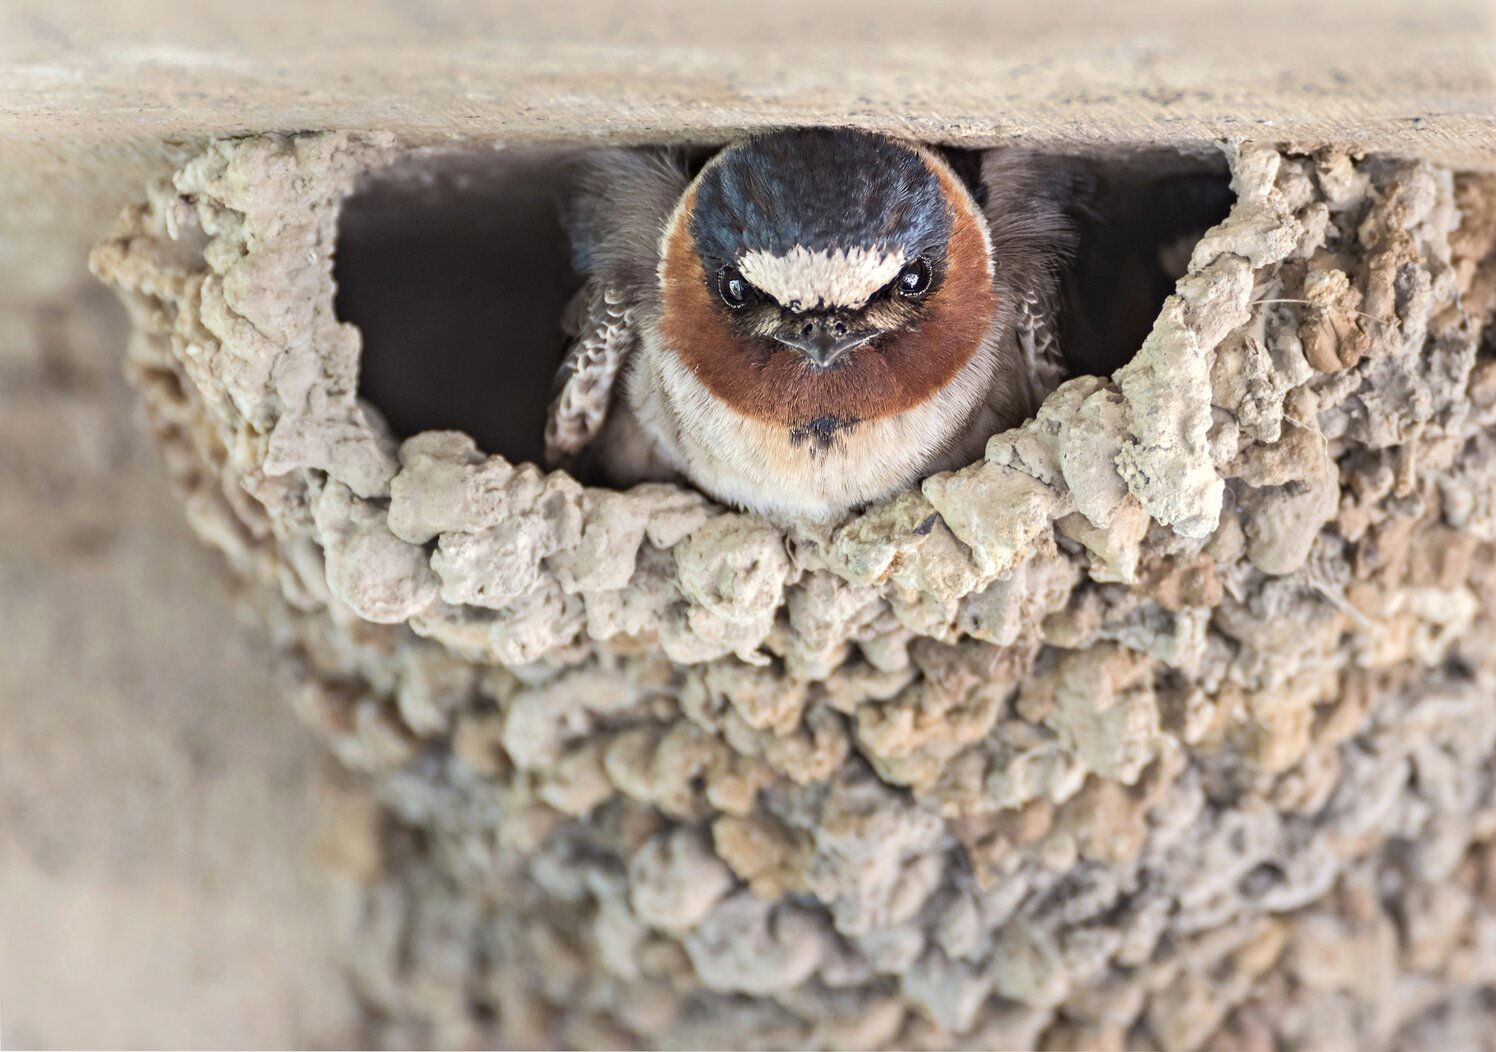 Cliff Swallows often build their mud nests on man-made structures. Photo: Joe Galkowski/Audubon Photography Awards